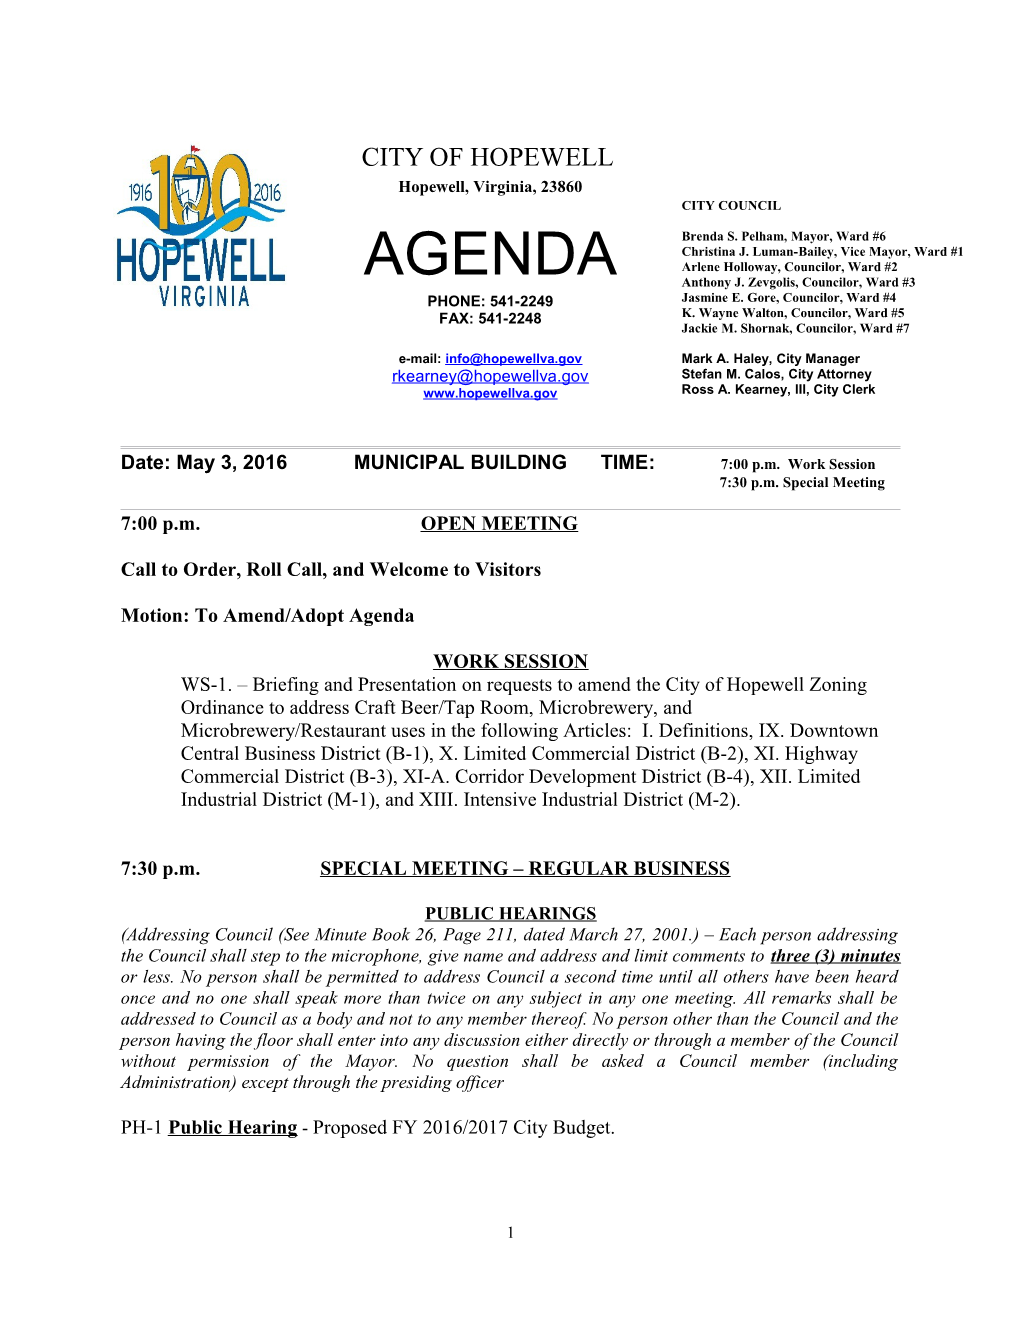 Agenda, 5/3/16 Special Meeting/Work Session, Smc Redline 4/28/16 (W3369167;1)